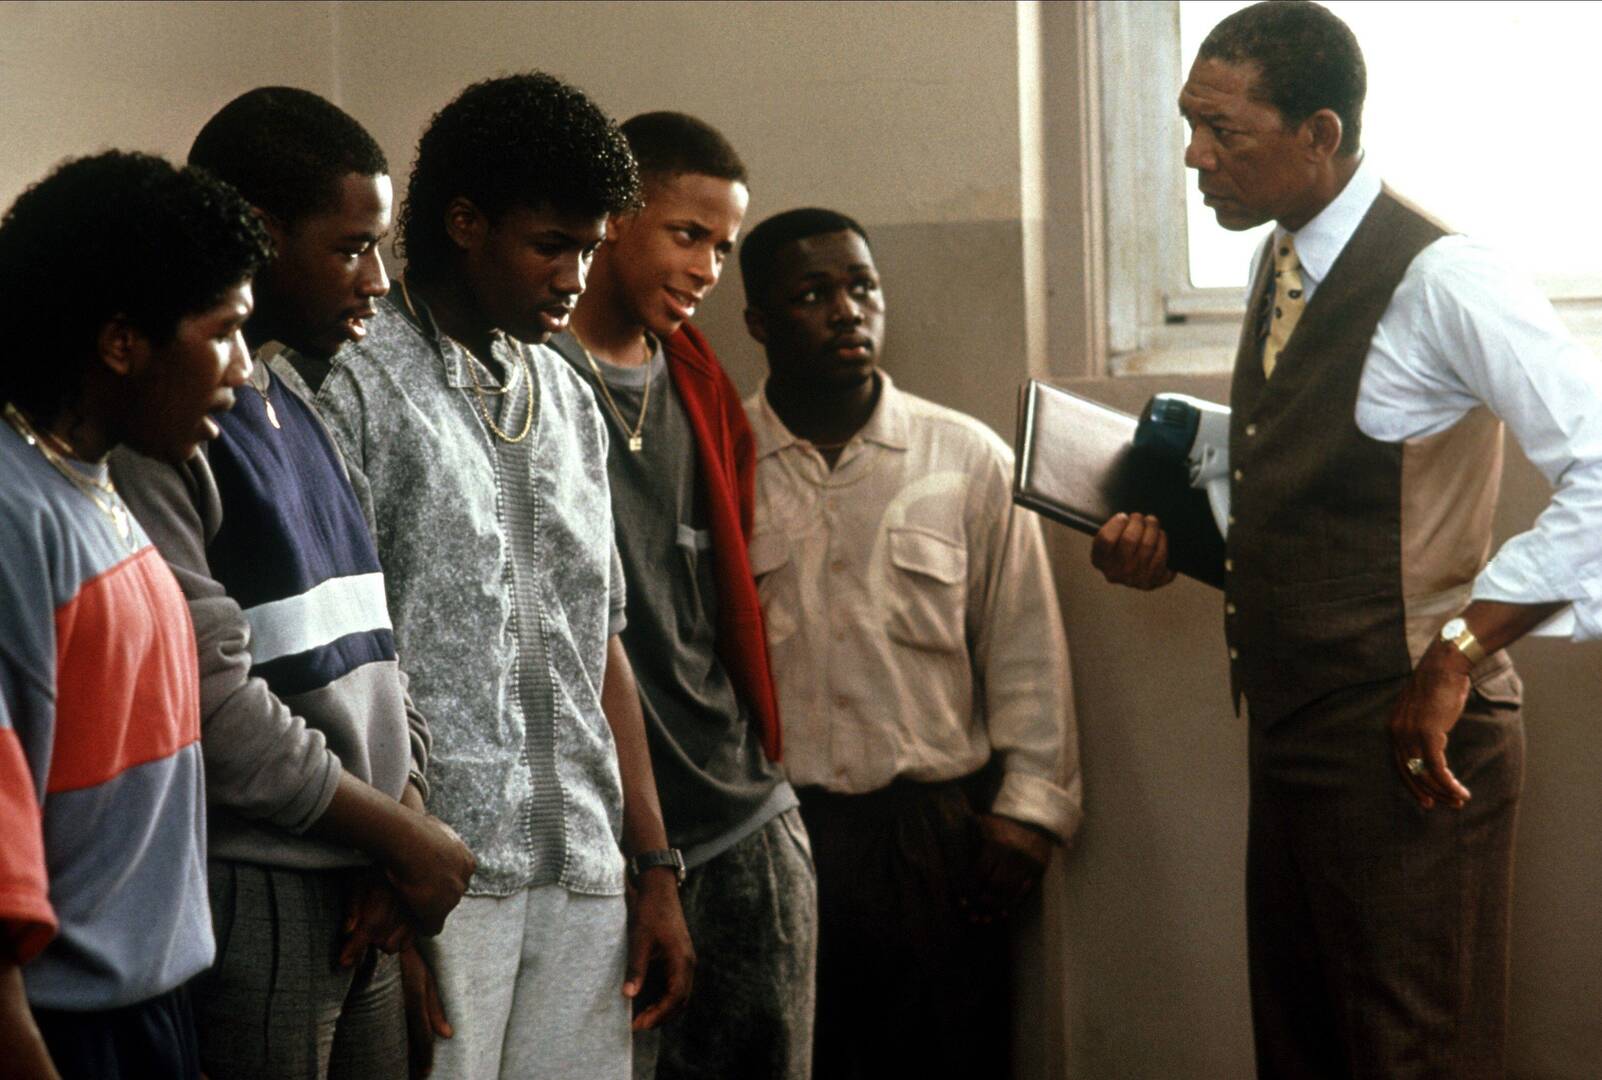 Morgan Freeman playing Joe Clarke, a principail, talking to teenaage students in the hallway